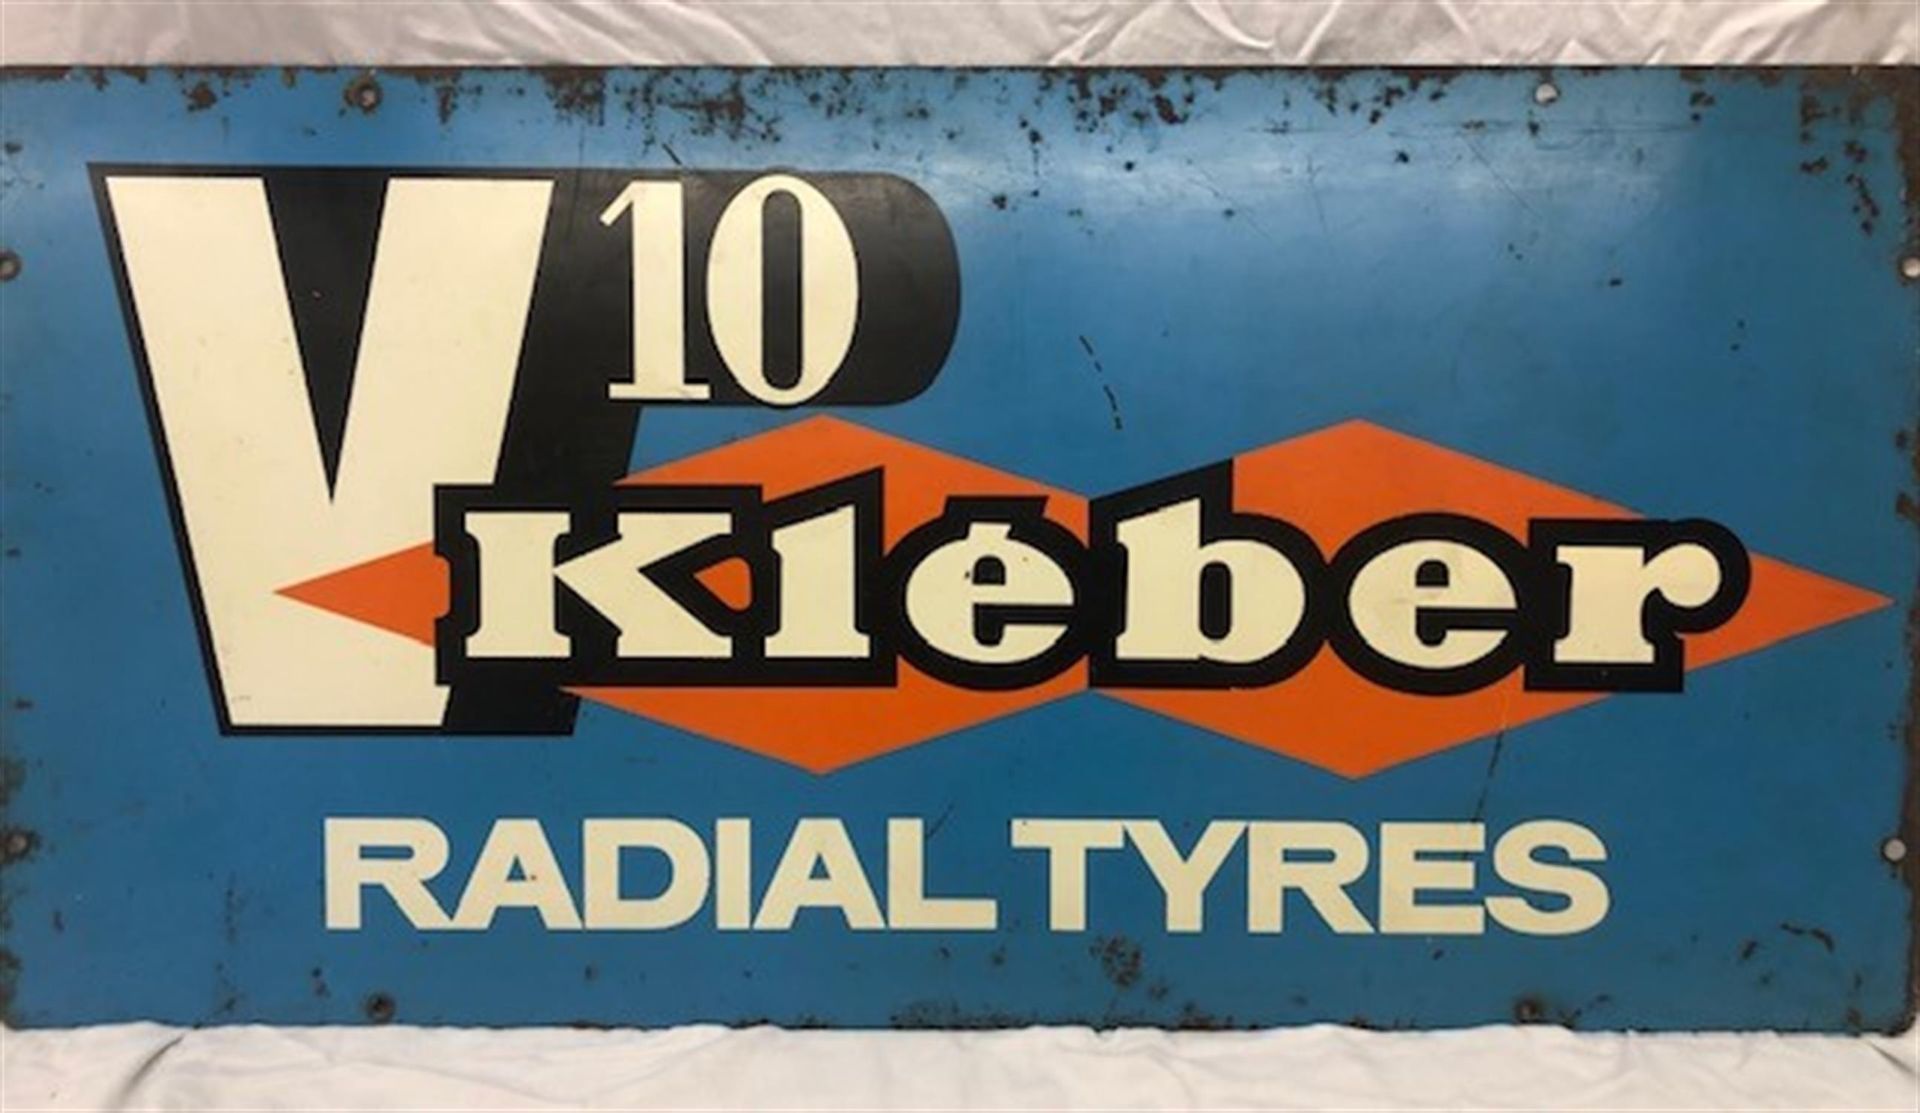 An Original Enamelled Metal Advertising Sign for V10 Kléber Radial Tyres